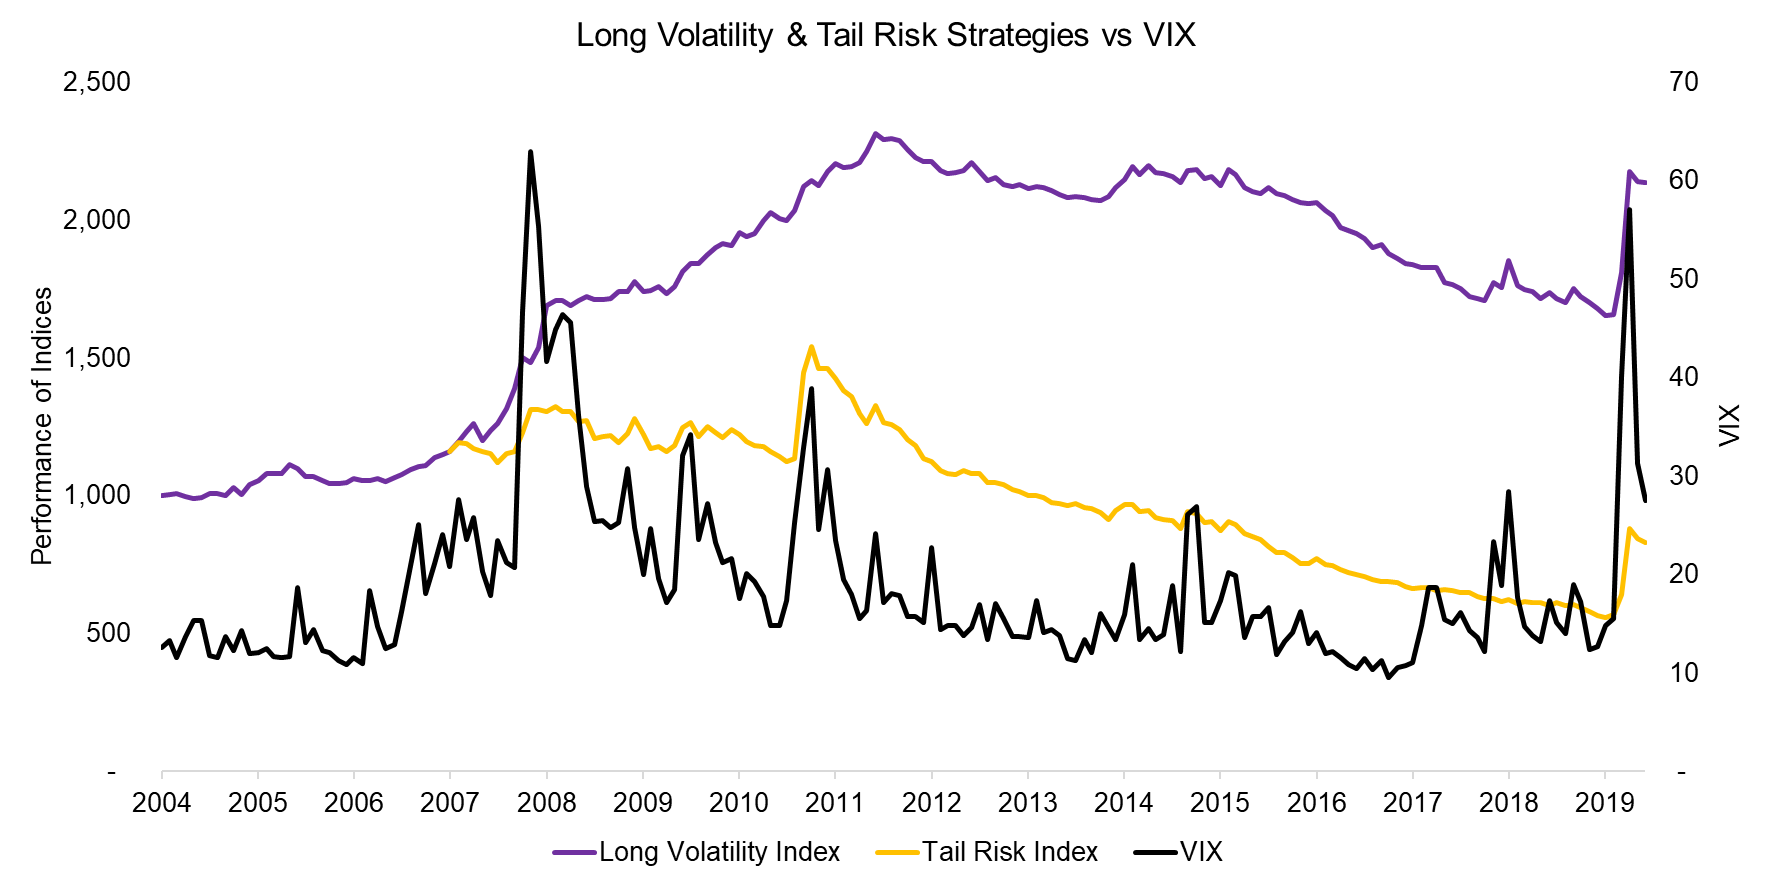 Long Volatility & Tail Risk Strategies vs VIX